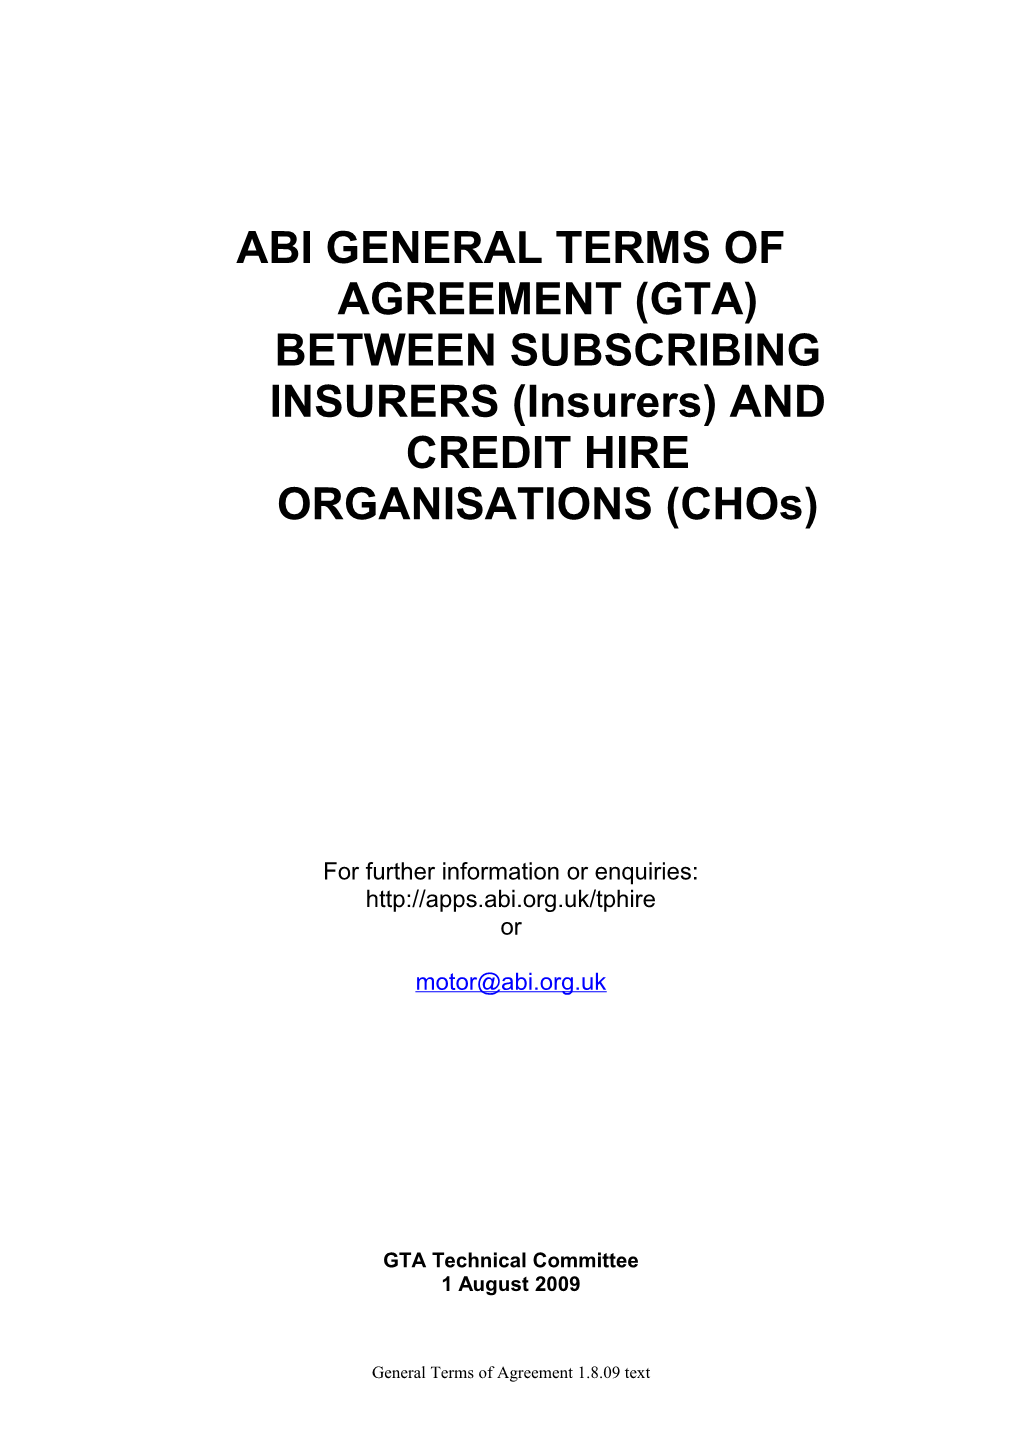 ABI GENERAL TERMS of AGREEMENT (GTA) BETWEEN SUBSCRIBING INSURERS (Insurers) and CREDIT